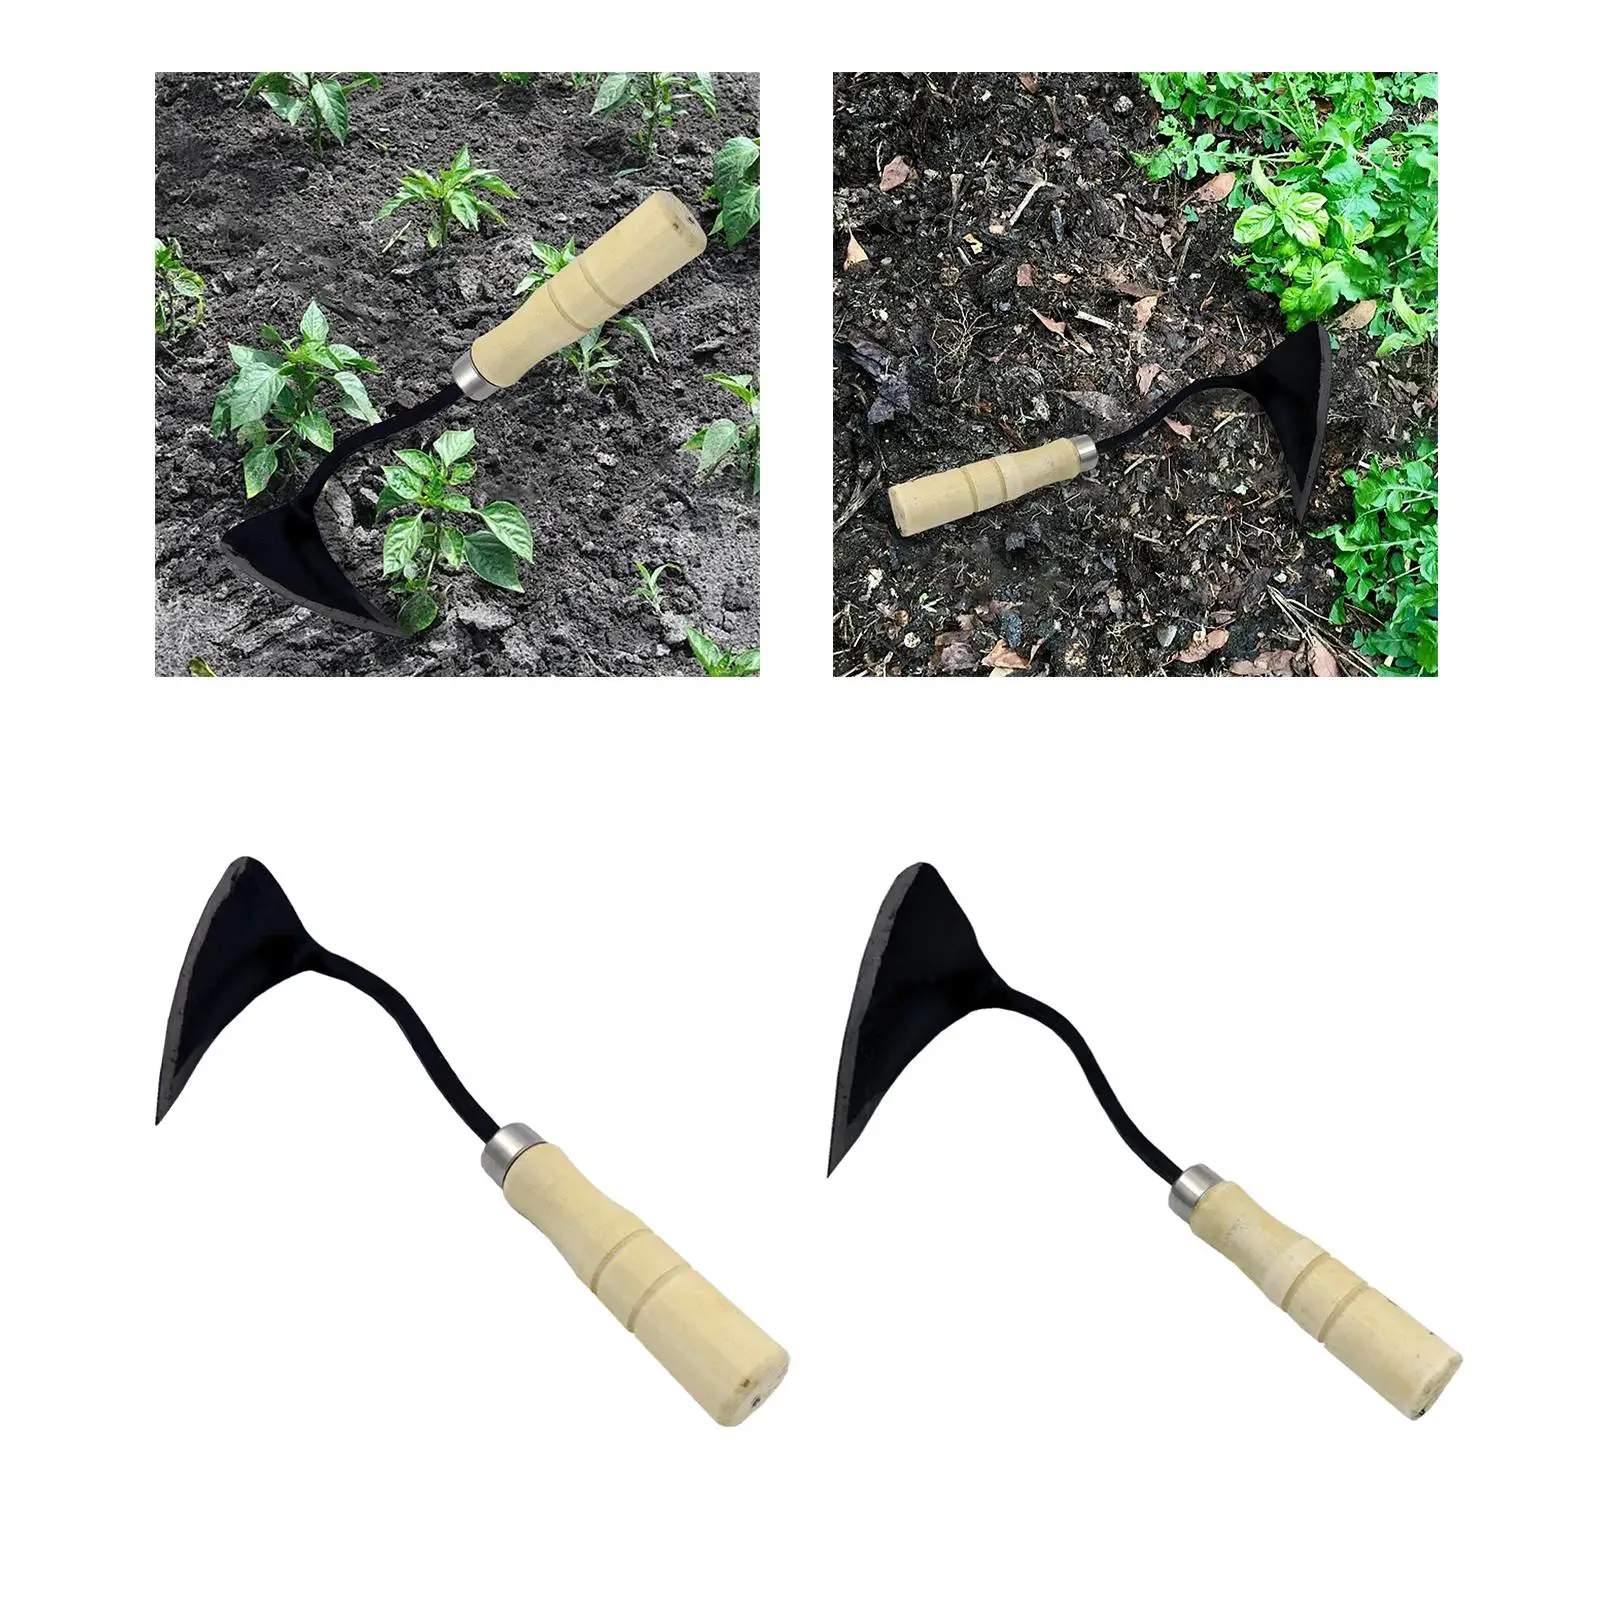 Plow Hoe Forged Portable Ergonomic Korean Gardening Hoe Garden Weeding Hoe for Yard Flowers Garden Planting Kids and Adults